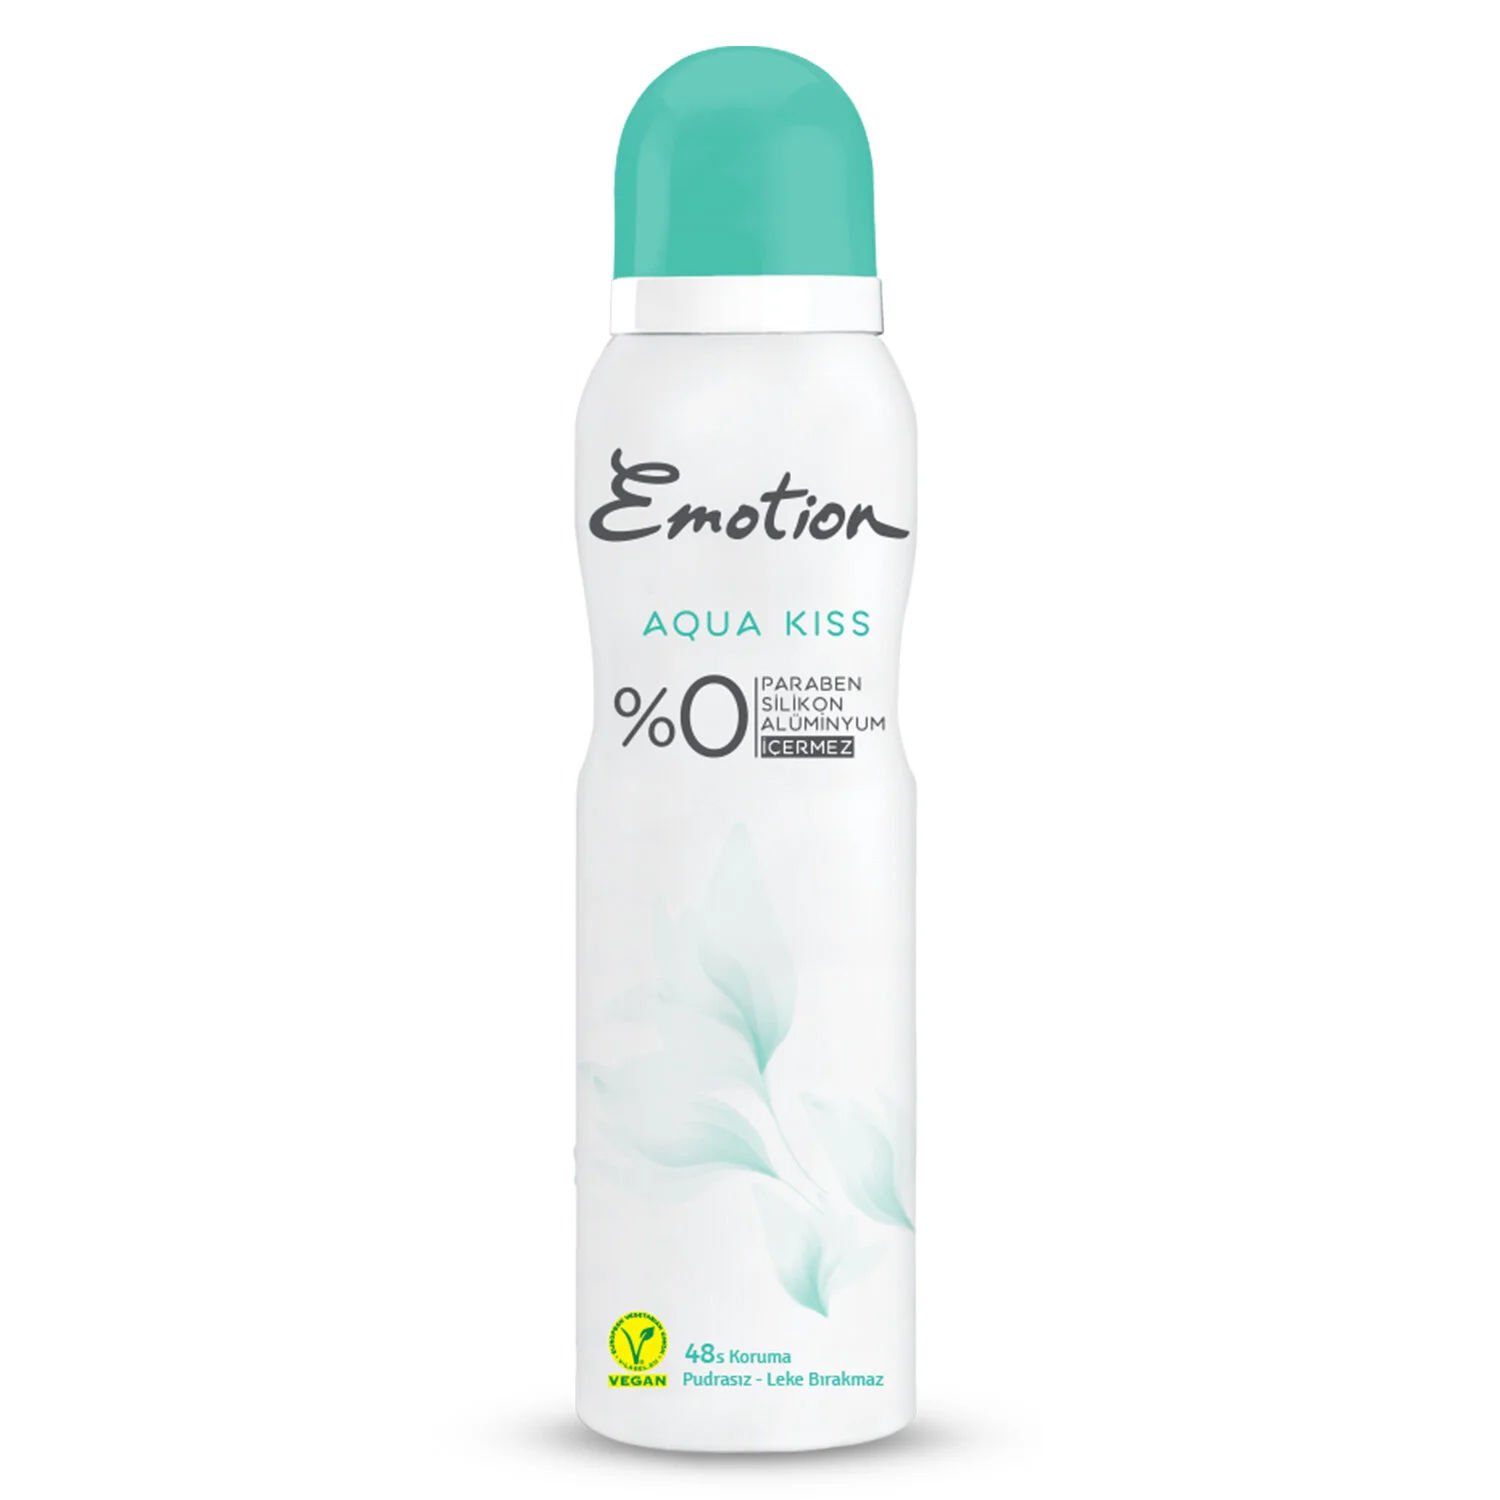 Emotion Deodorant Aqua Kiss 150ml